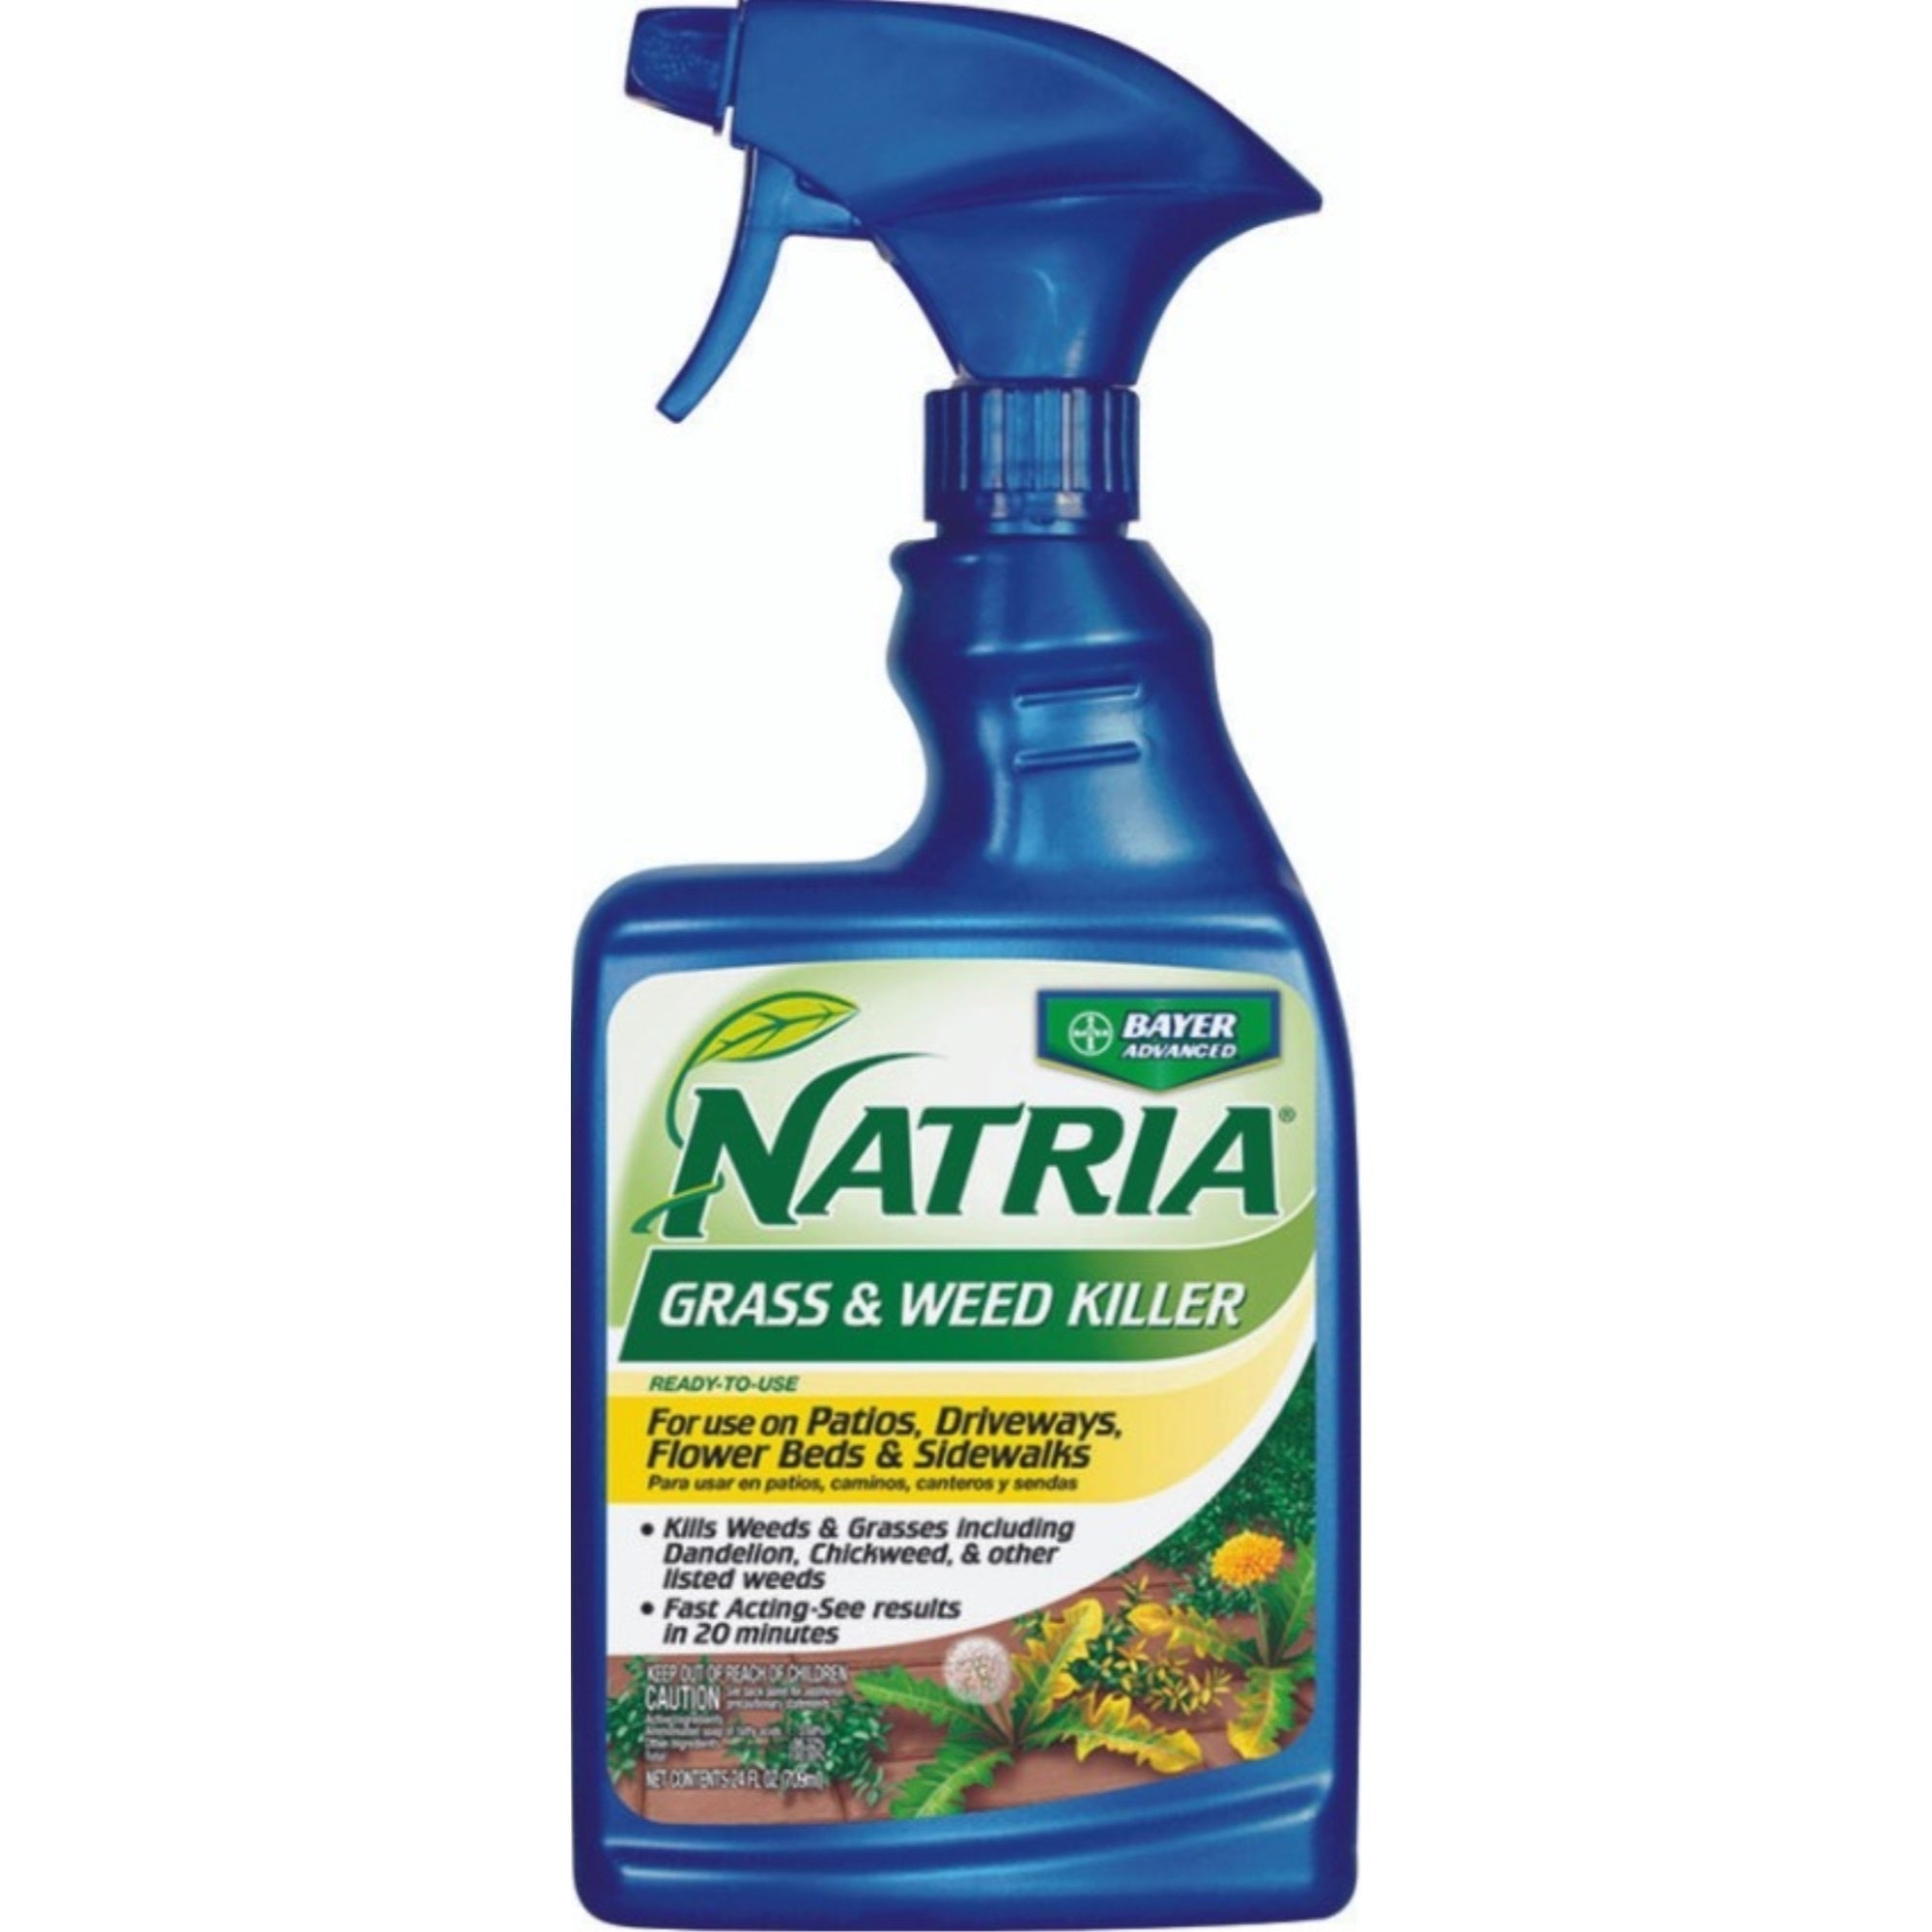 Natria Grass and Weed Killer Spray, Ready-To-Use, 24 Ounces